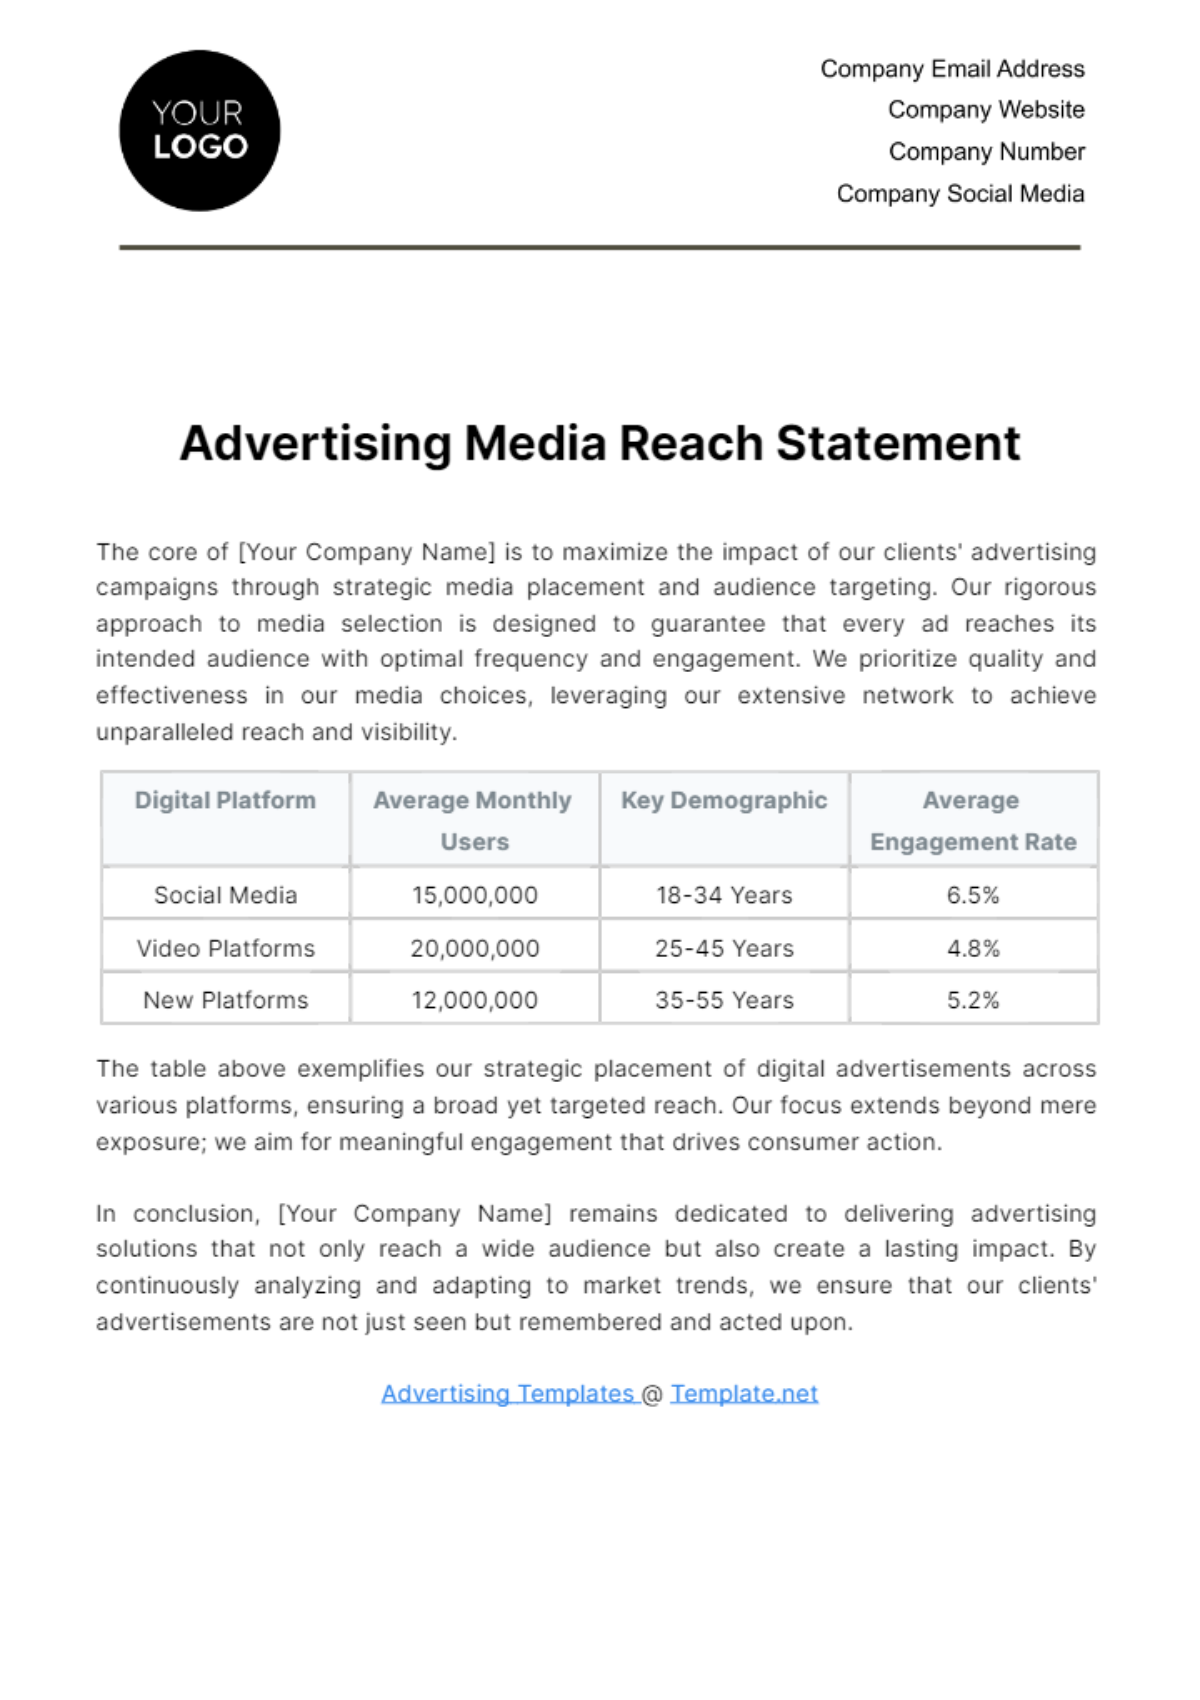 Advertising Media Reach Statement Template